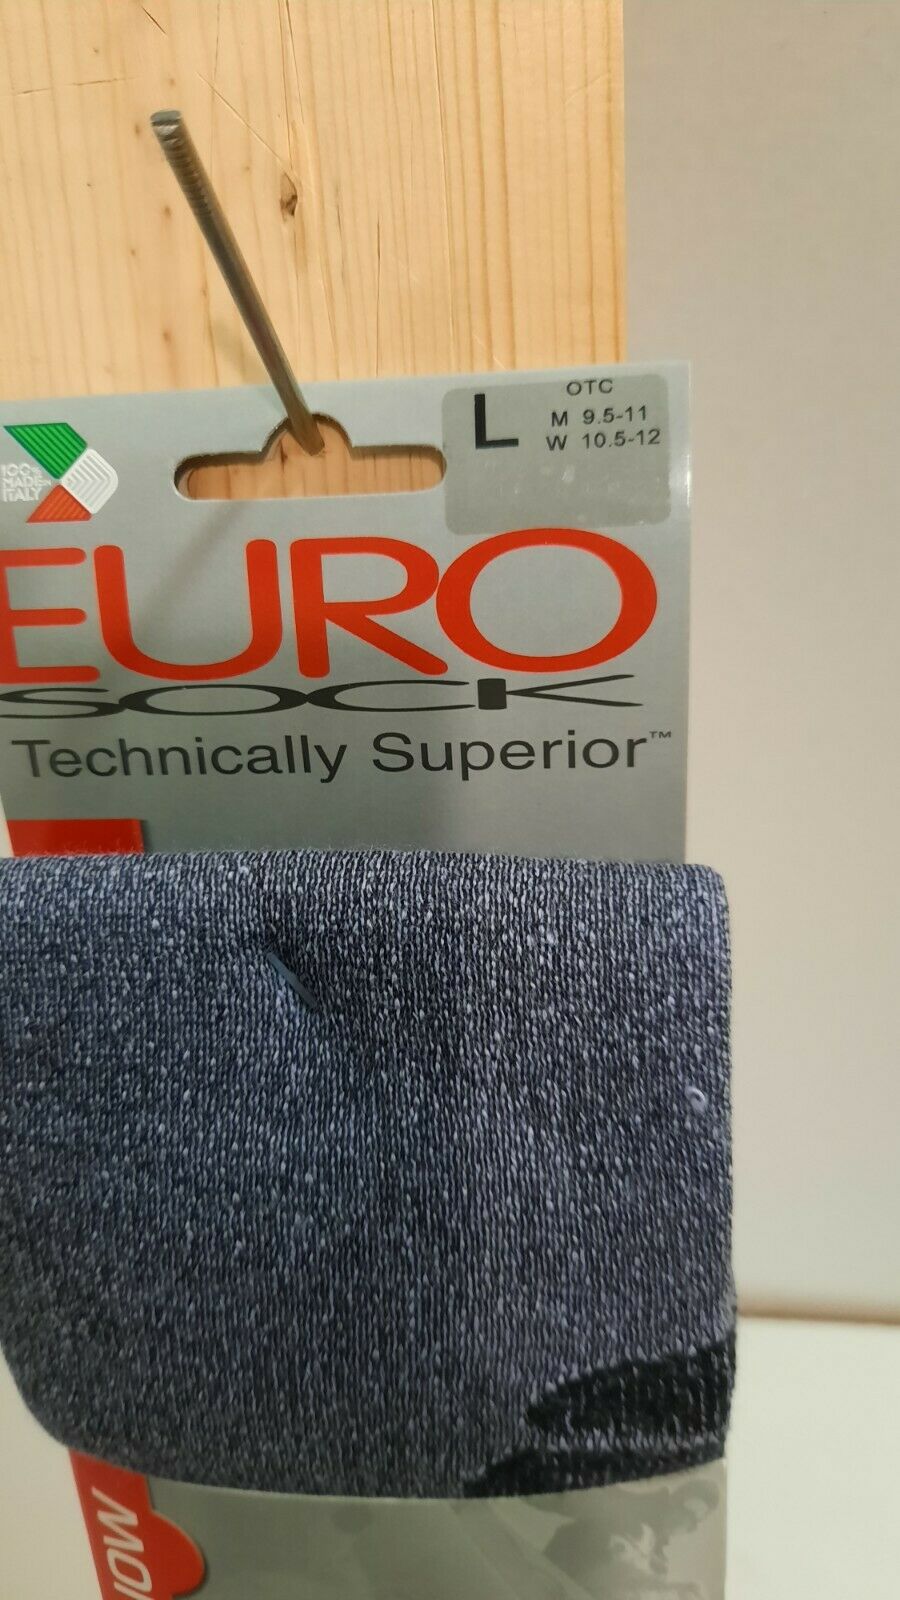 Euro Technically superior snow socks size large